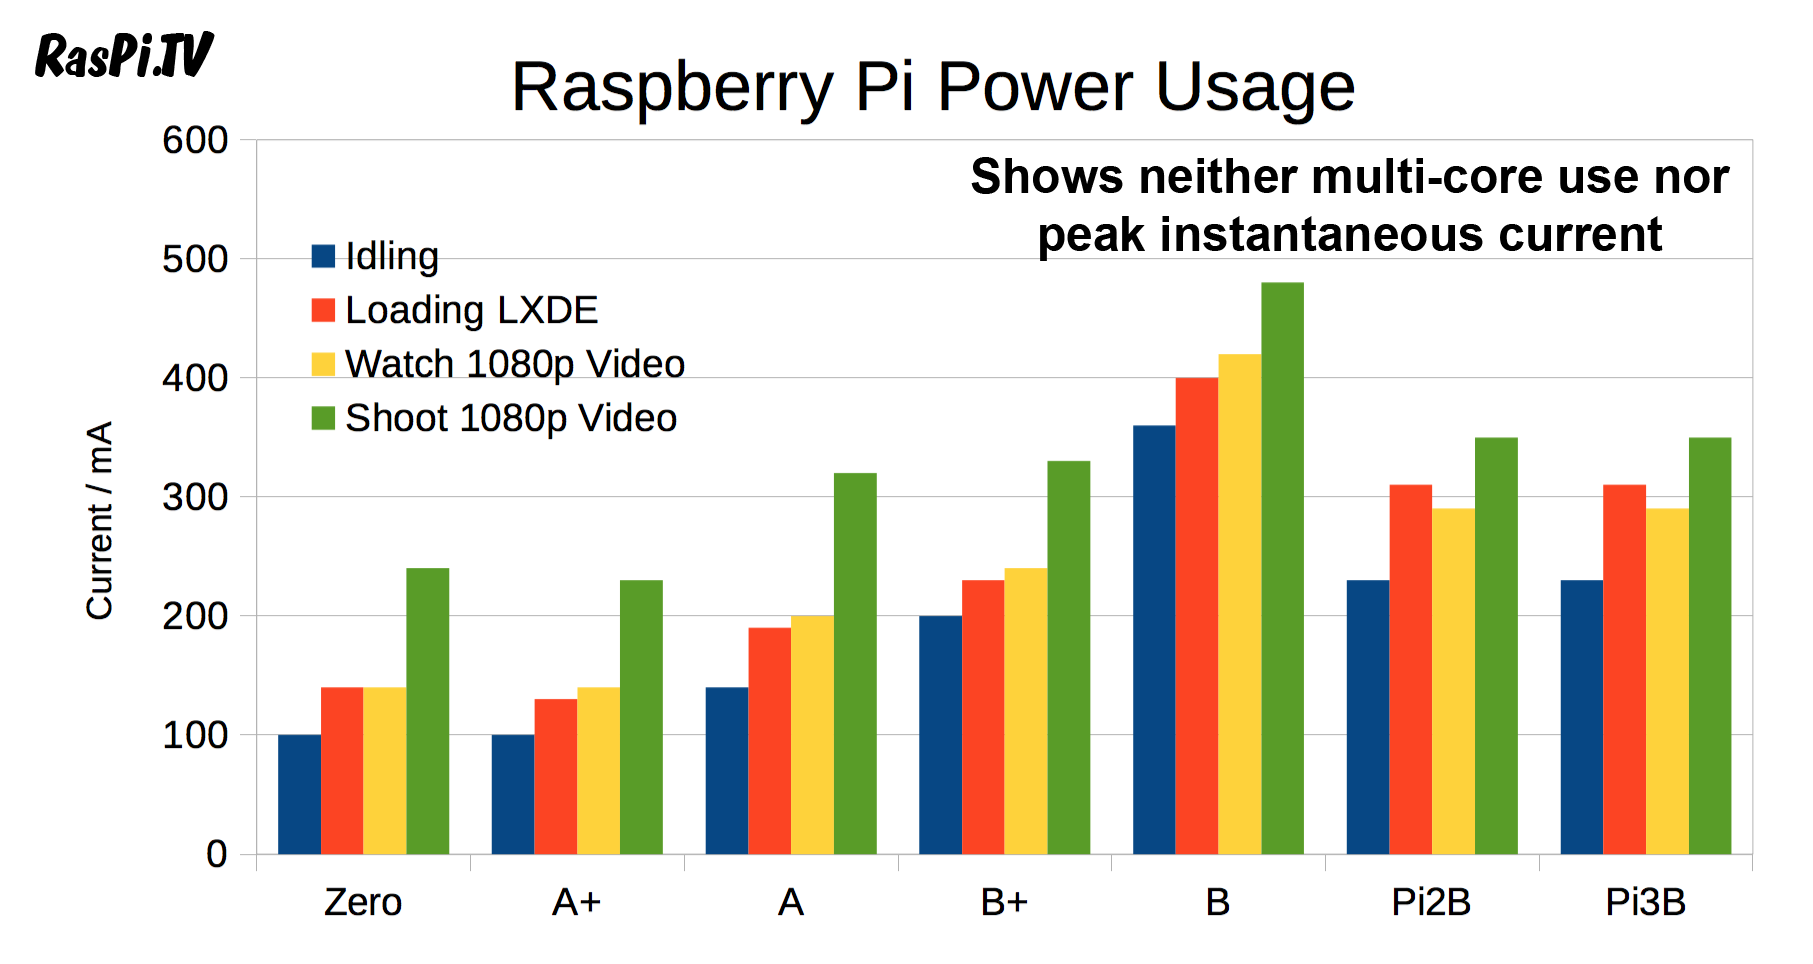 Raspberry Pi Model Comparison Chart